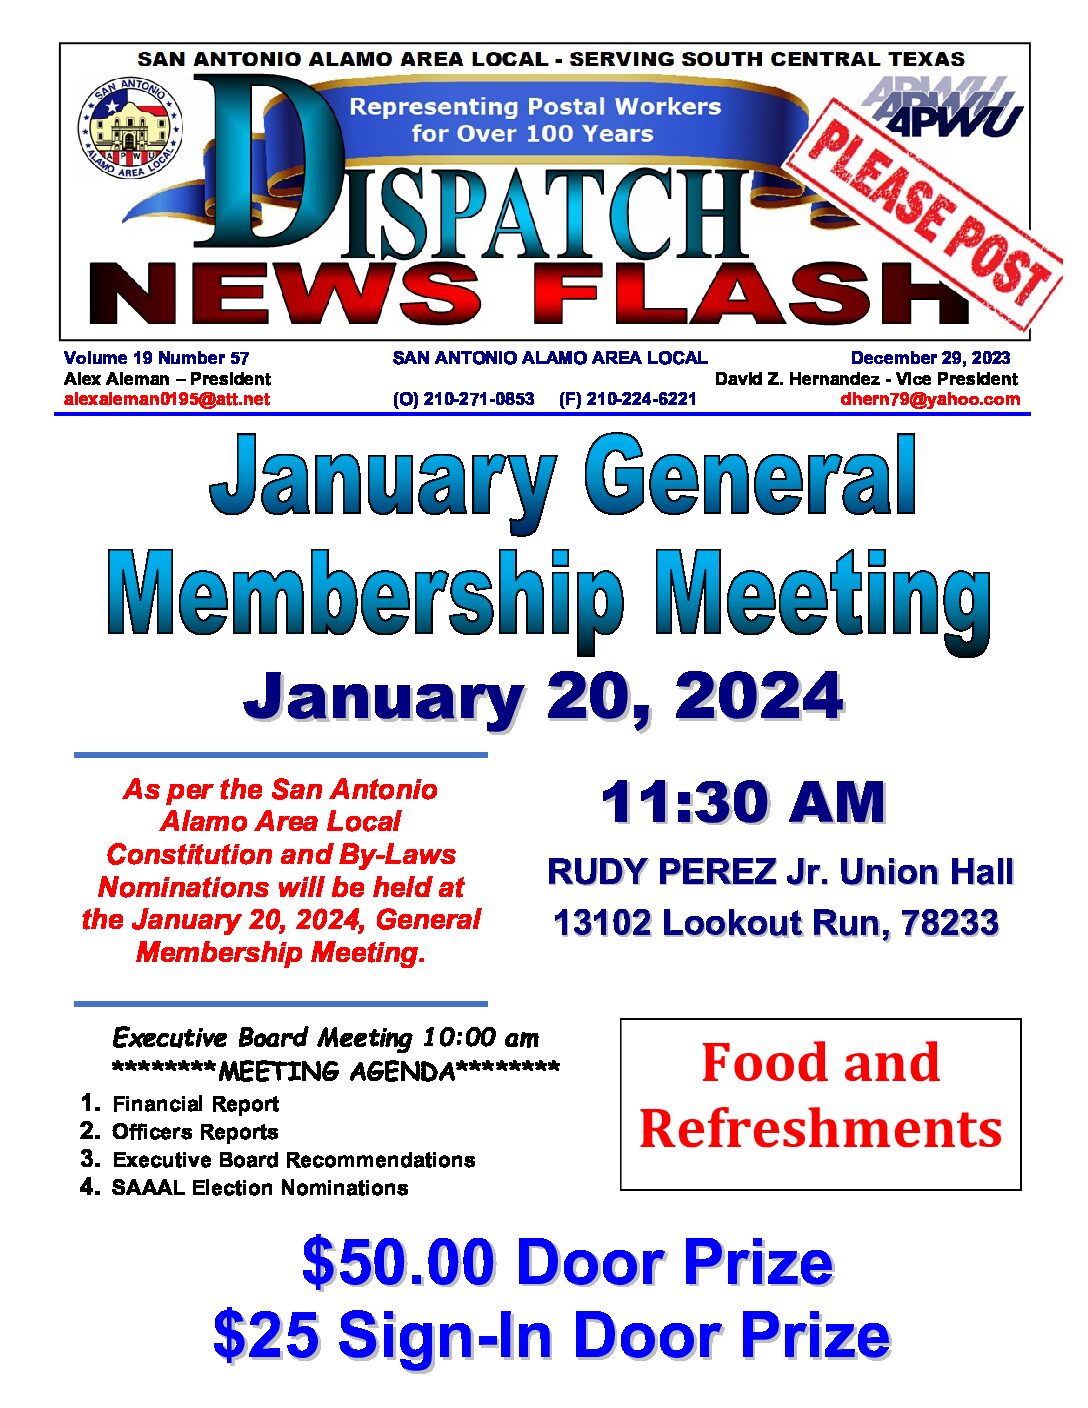 NewsFlash 19-57 January General Membership Meeting Notice - 